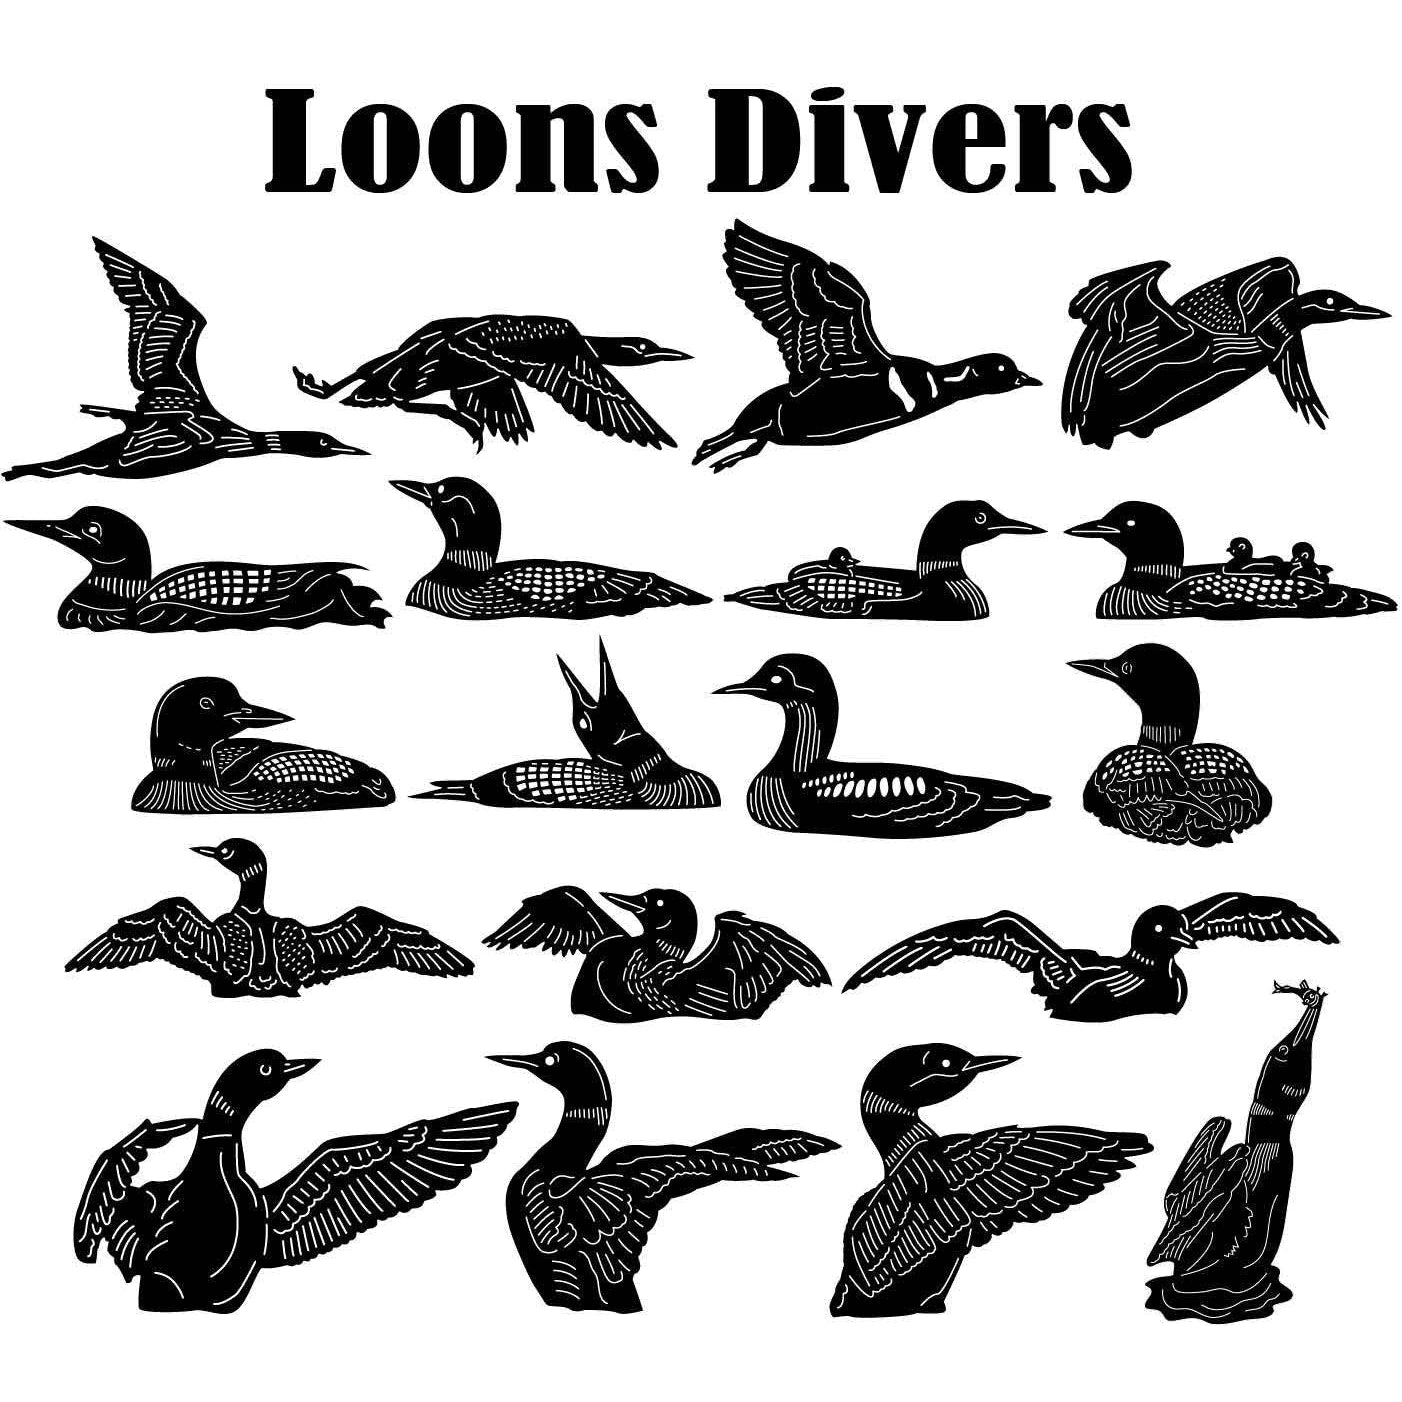 Loons Divers-DXFforCNC.com-DXF Files cut ready cnc machines